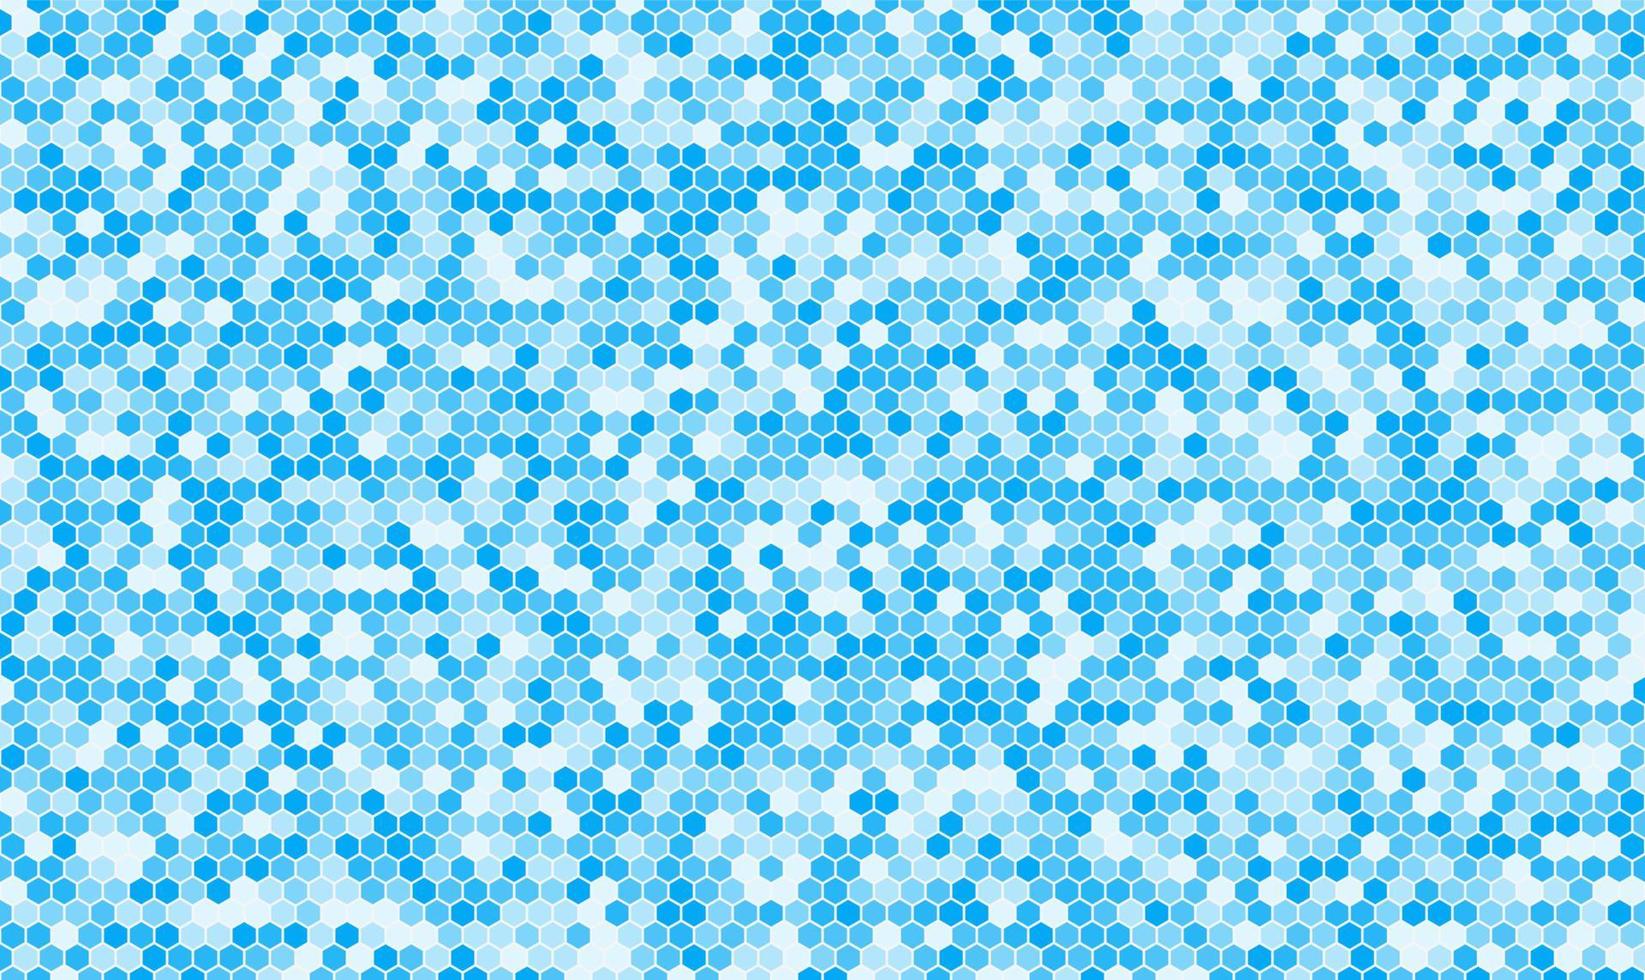 abstracto moderno color azul aleatorio con un pequeño hexágono o fondo de patrón de forma de panal. vector